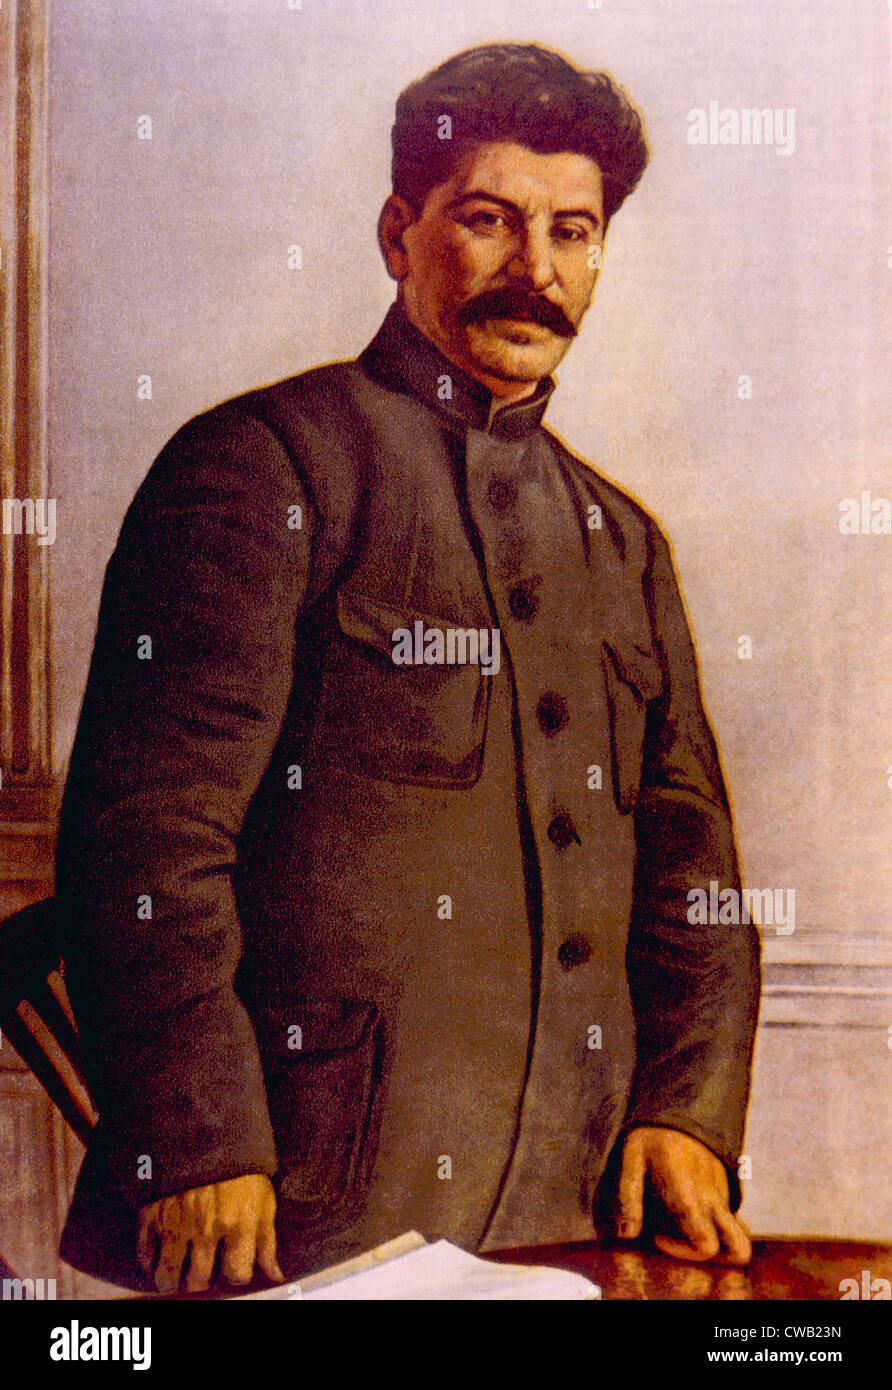 Joseph Stalin (1879-1953) Stock Photo